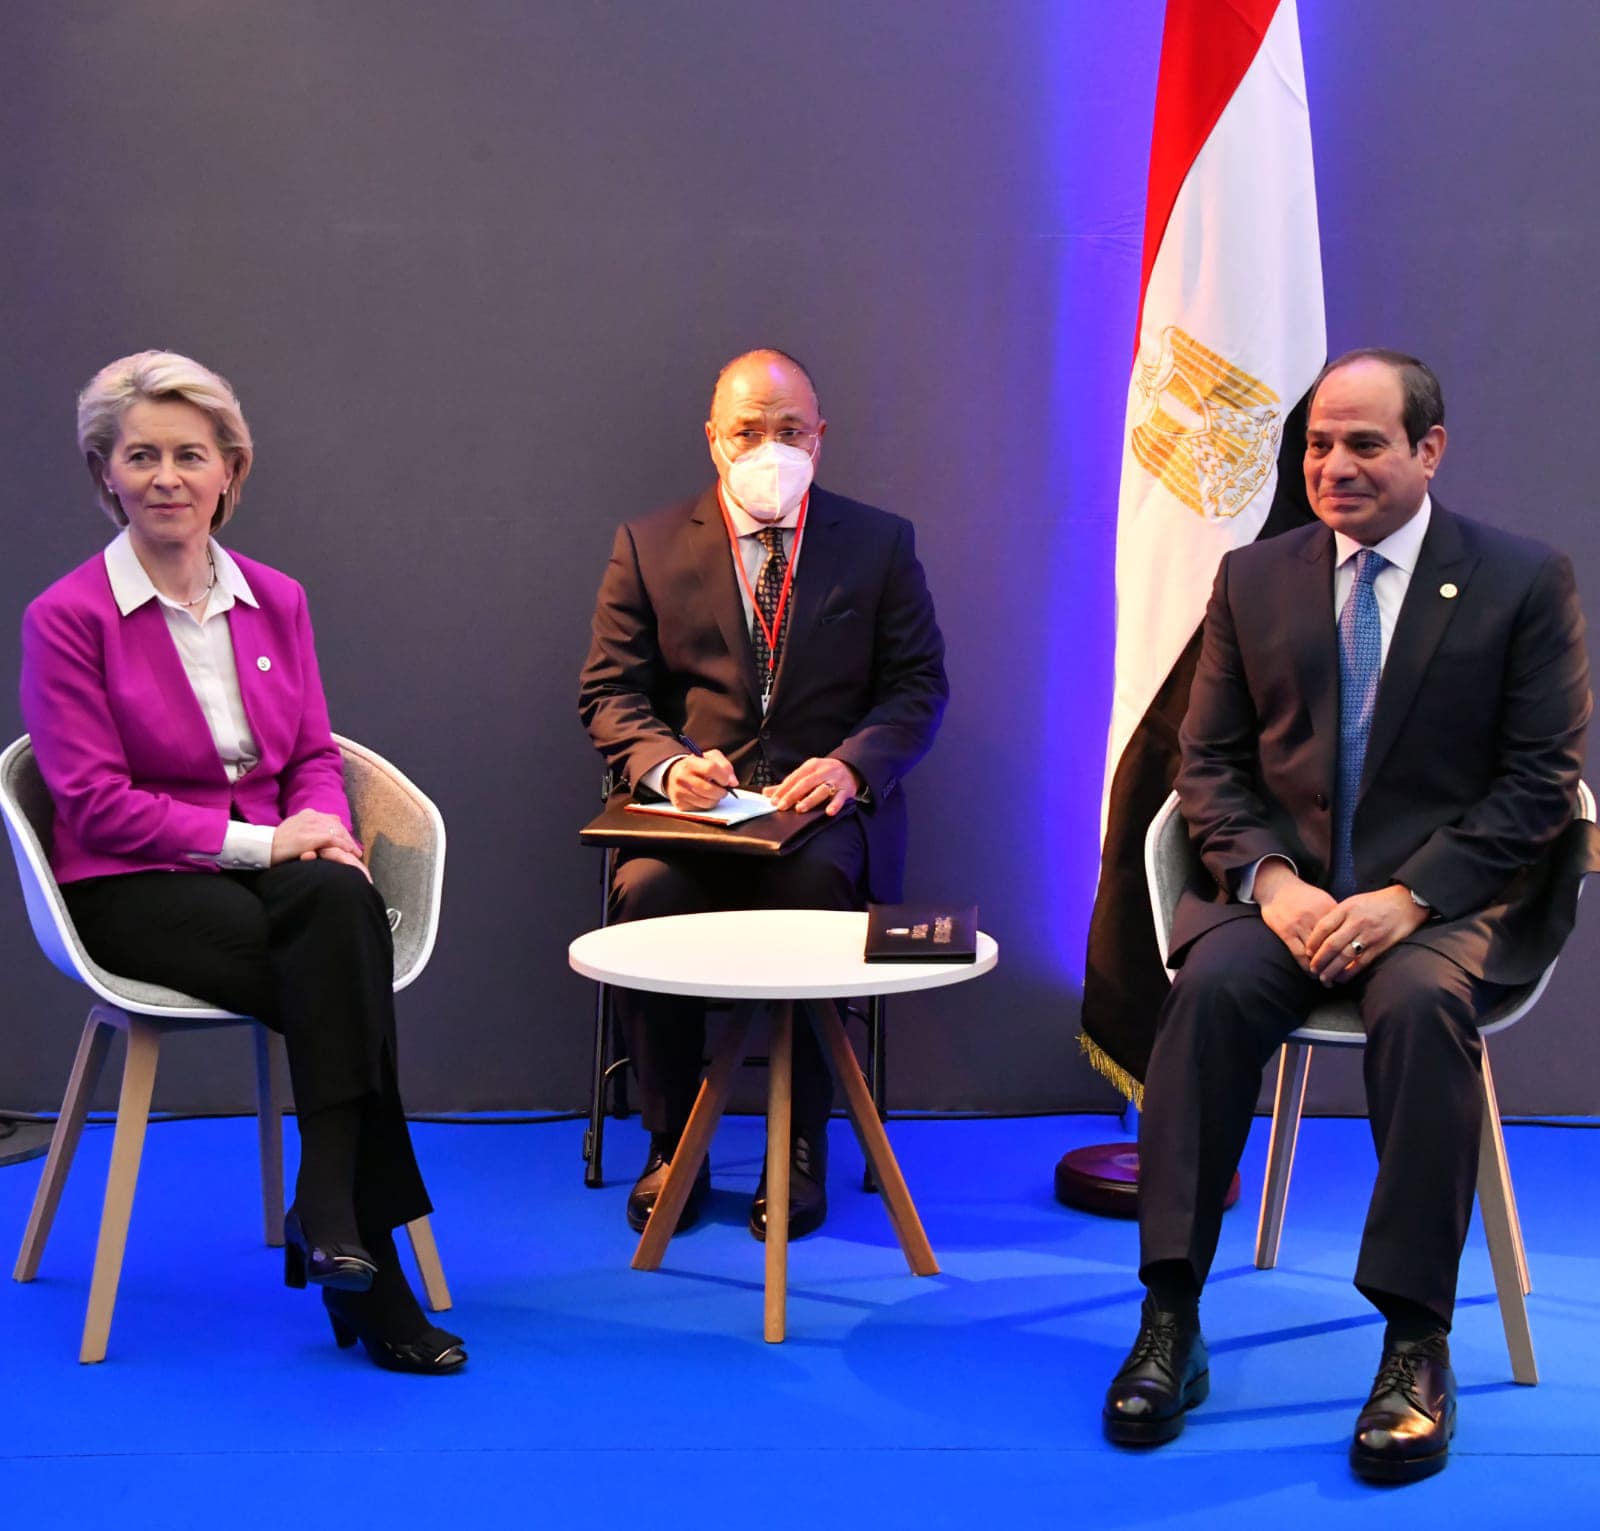 Egyptian President Abdel Fattah El-Sisi meets European Commission President Ursula von der Leyen on the sidelines of the One Ocean Summit in Brest, France. (Facebook/Spokesman of the Egyptian Presidency)